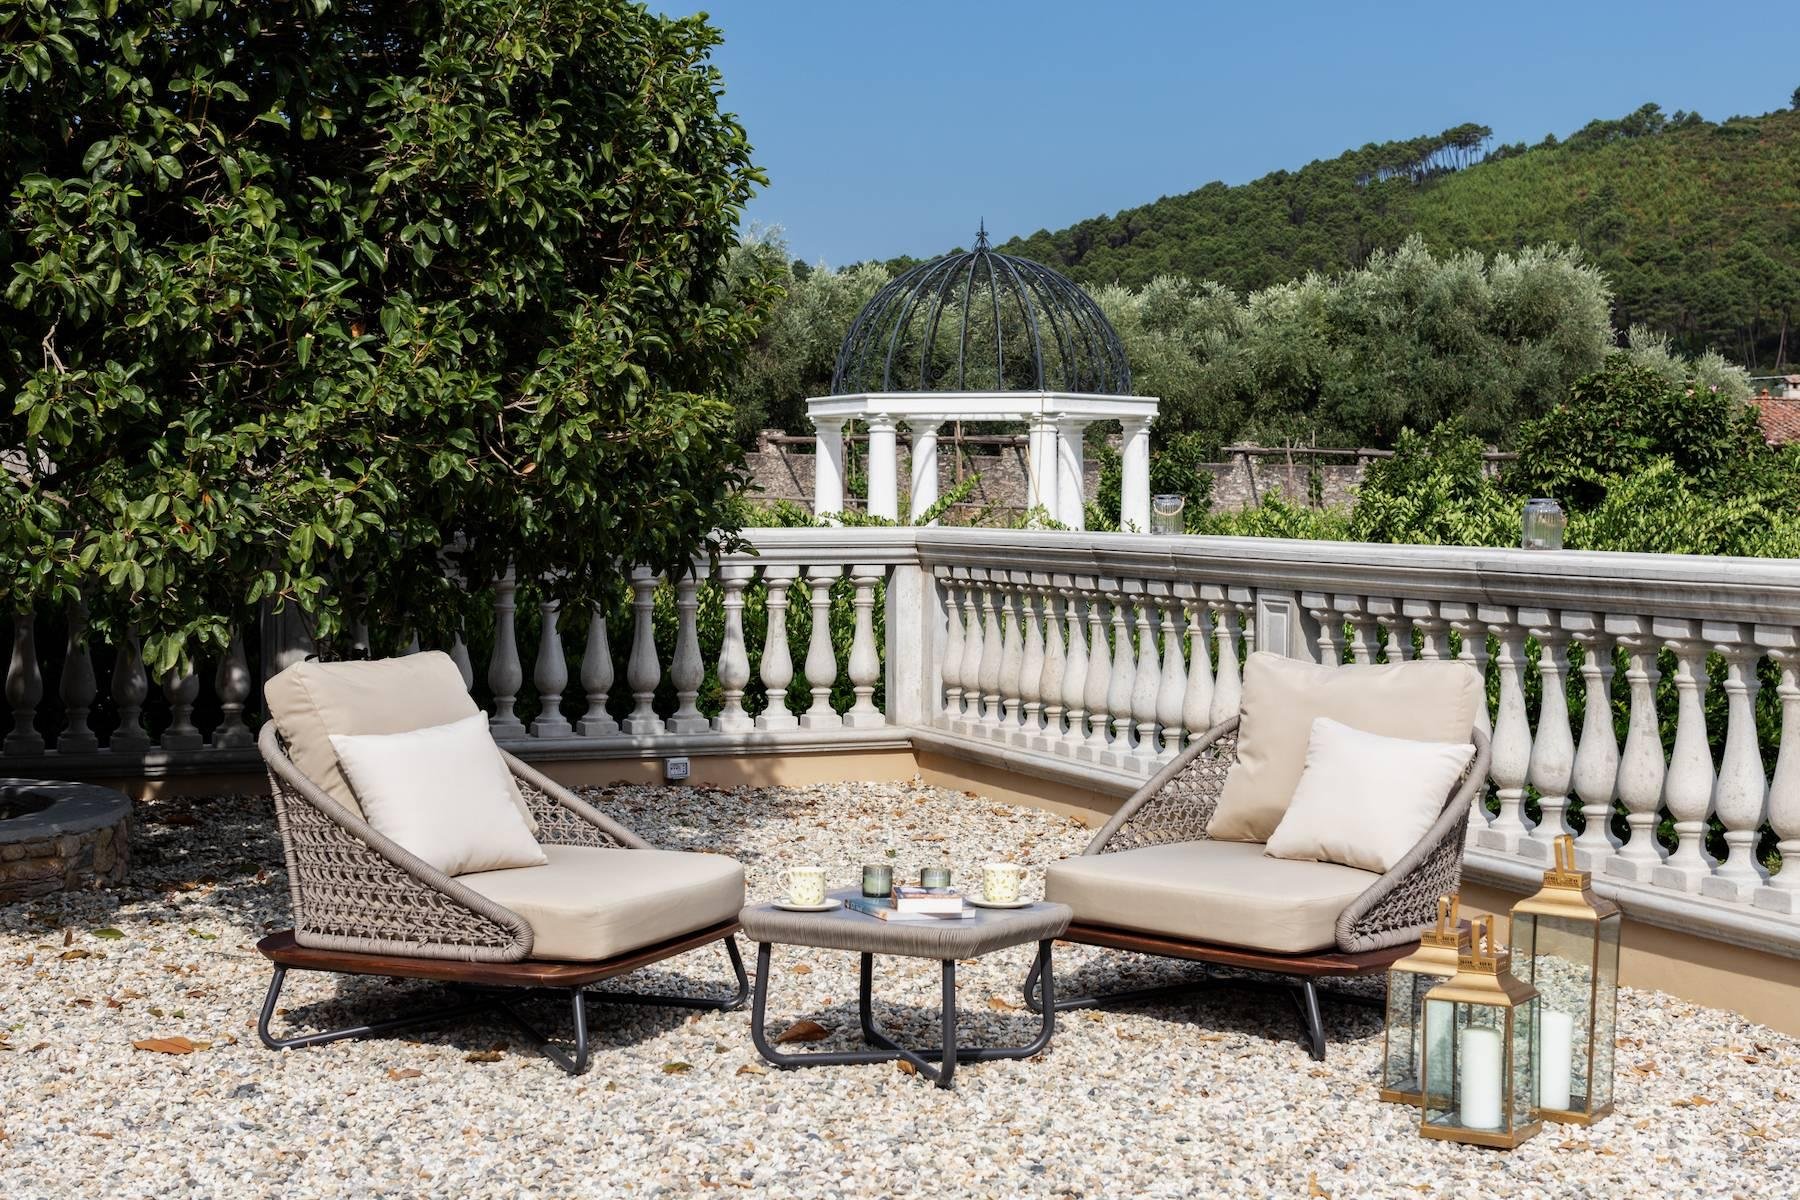 Francis York Book a Stay This Summer at Villa de Camelie Luxury Villa Rental Near Lucca in Tuscany, Italy Sothebys Realty Retreats 9.jpg